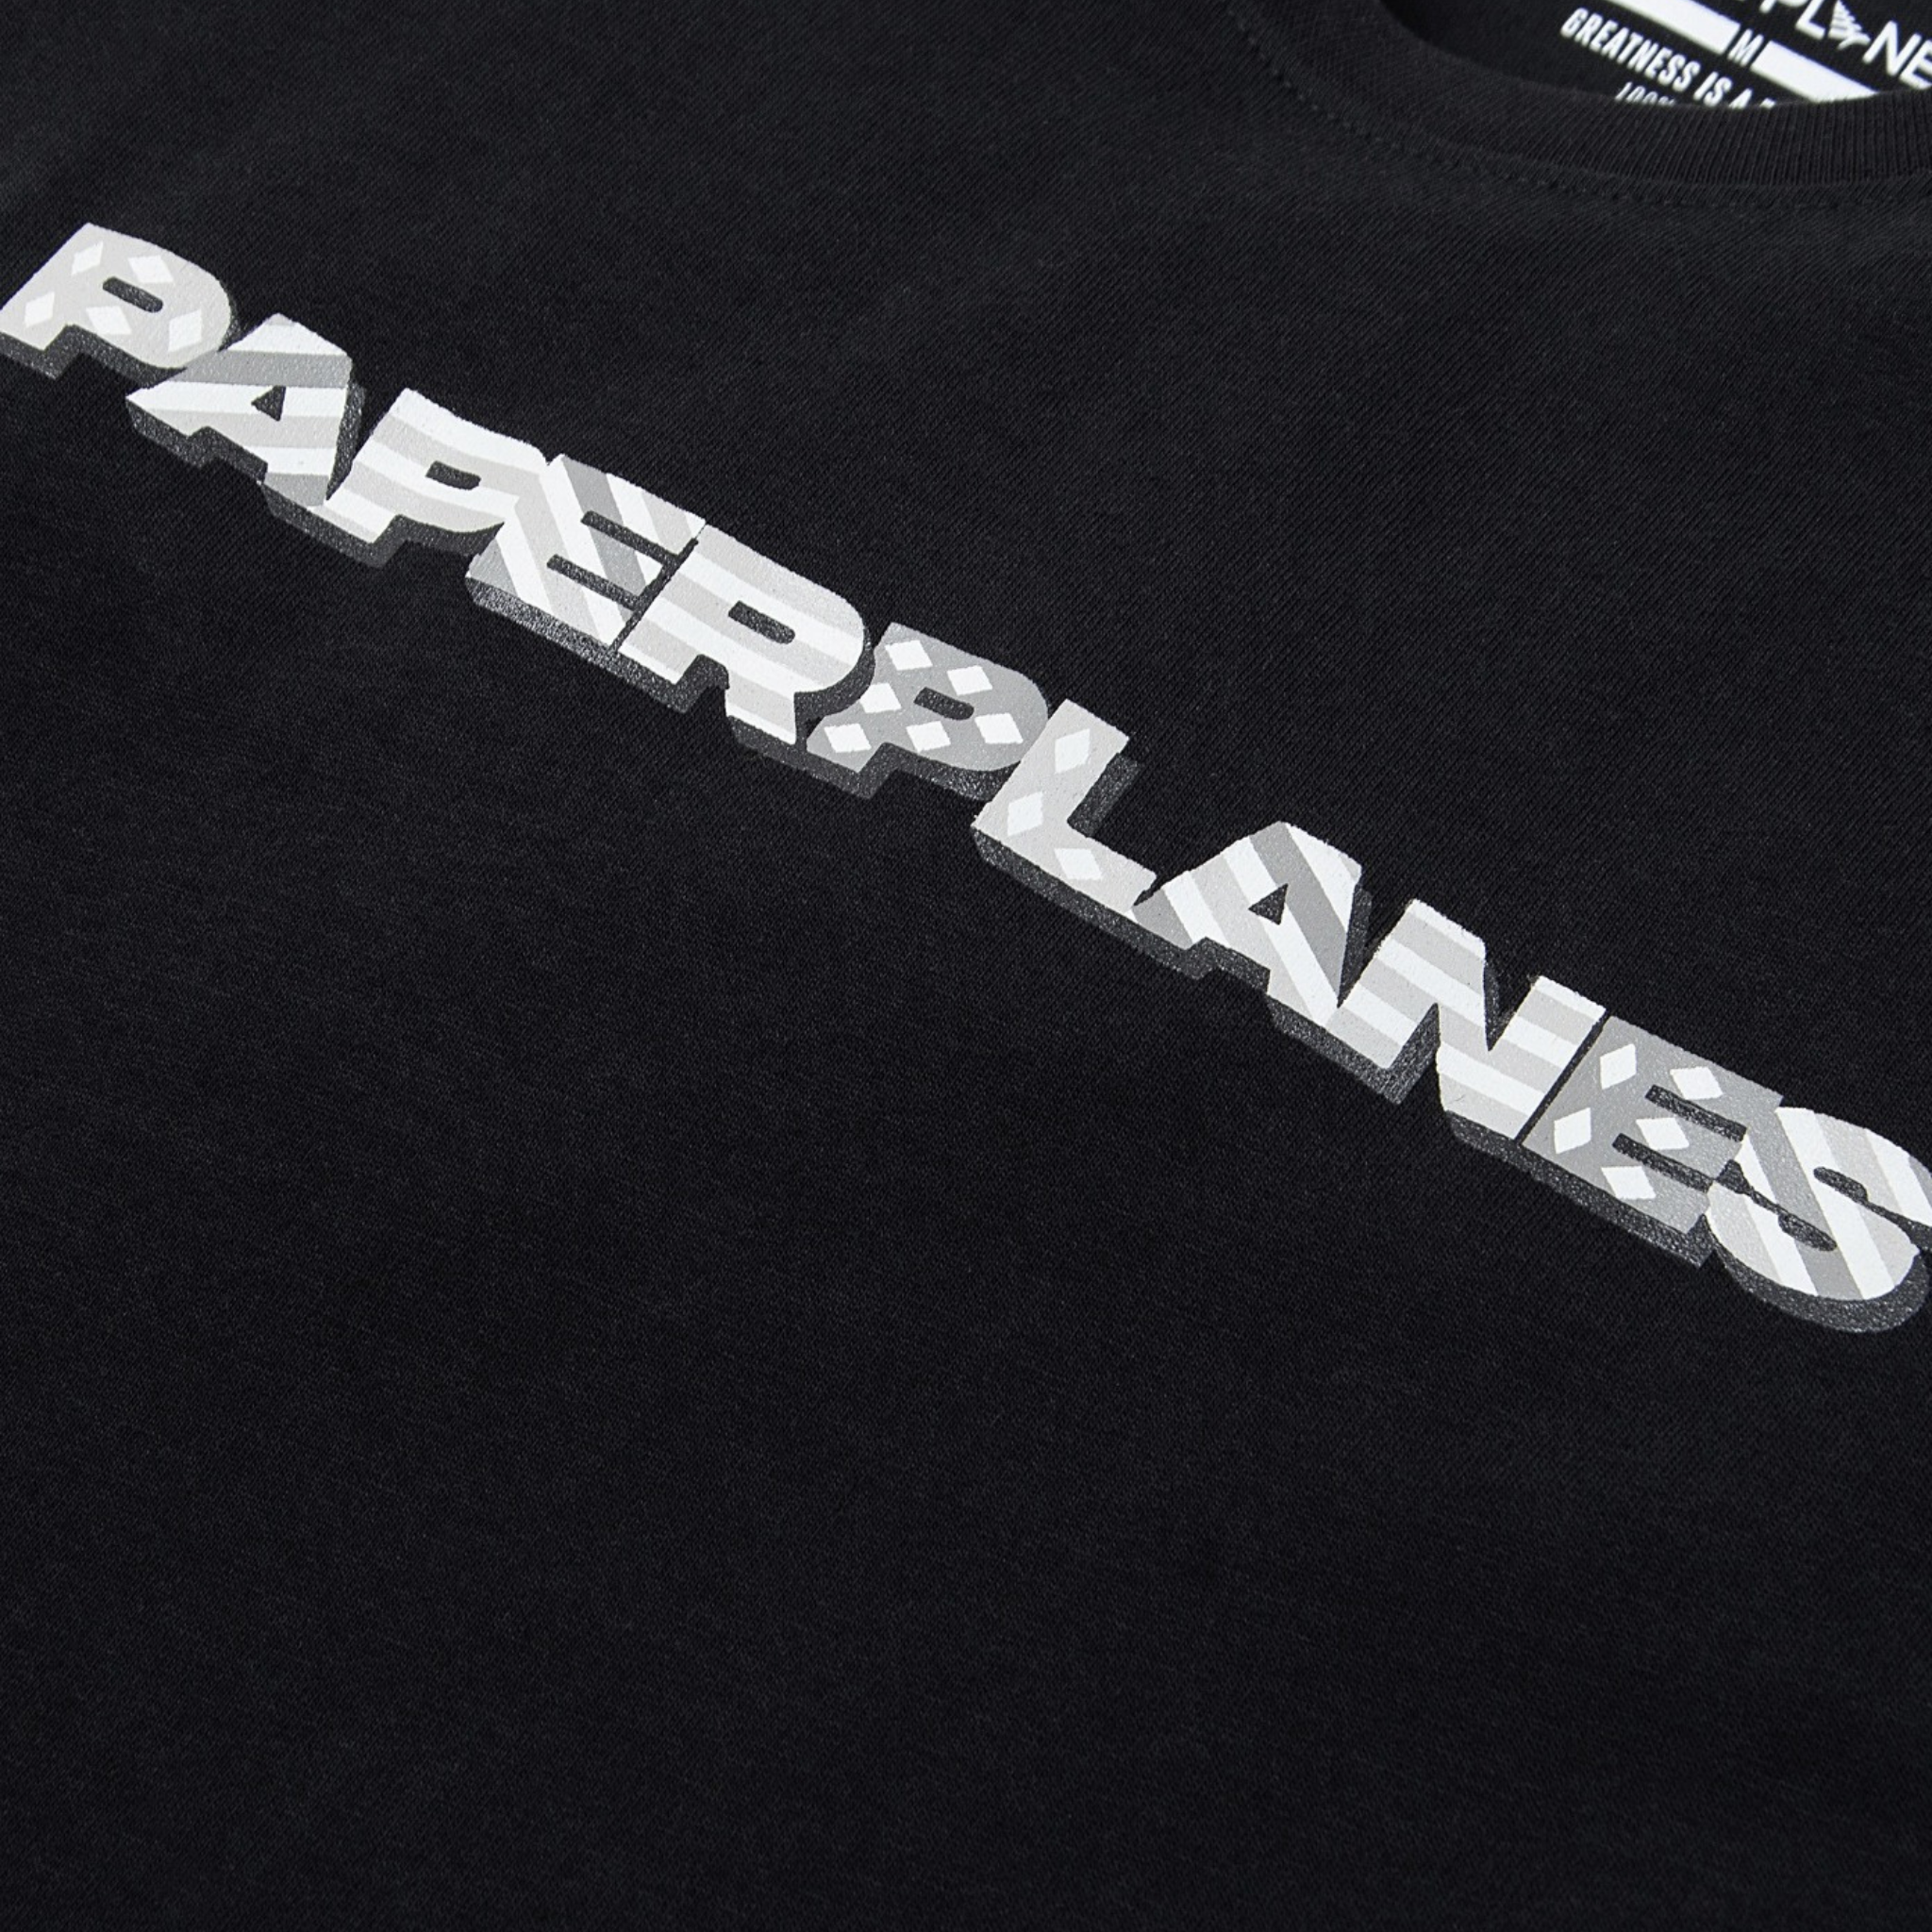 Paper Planes Diamond and Stripes Tee (Black)